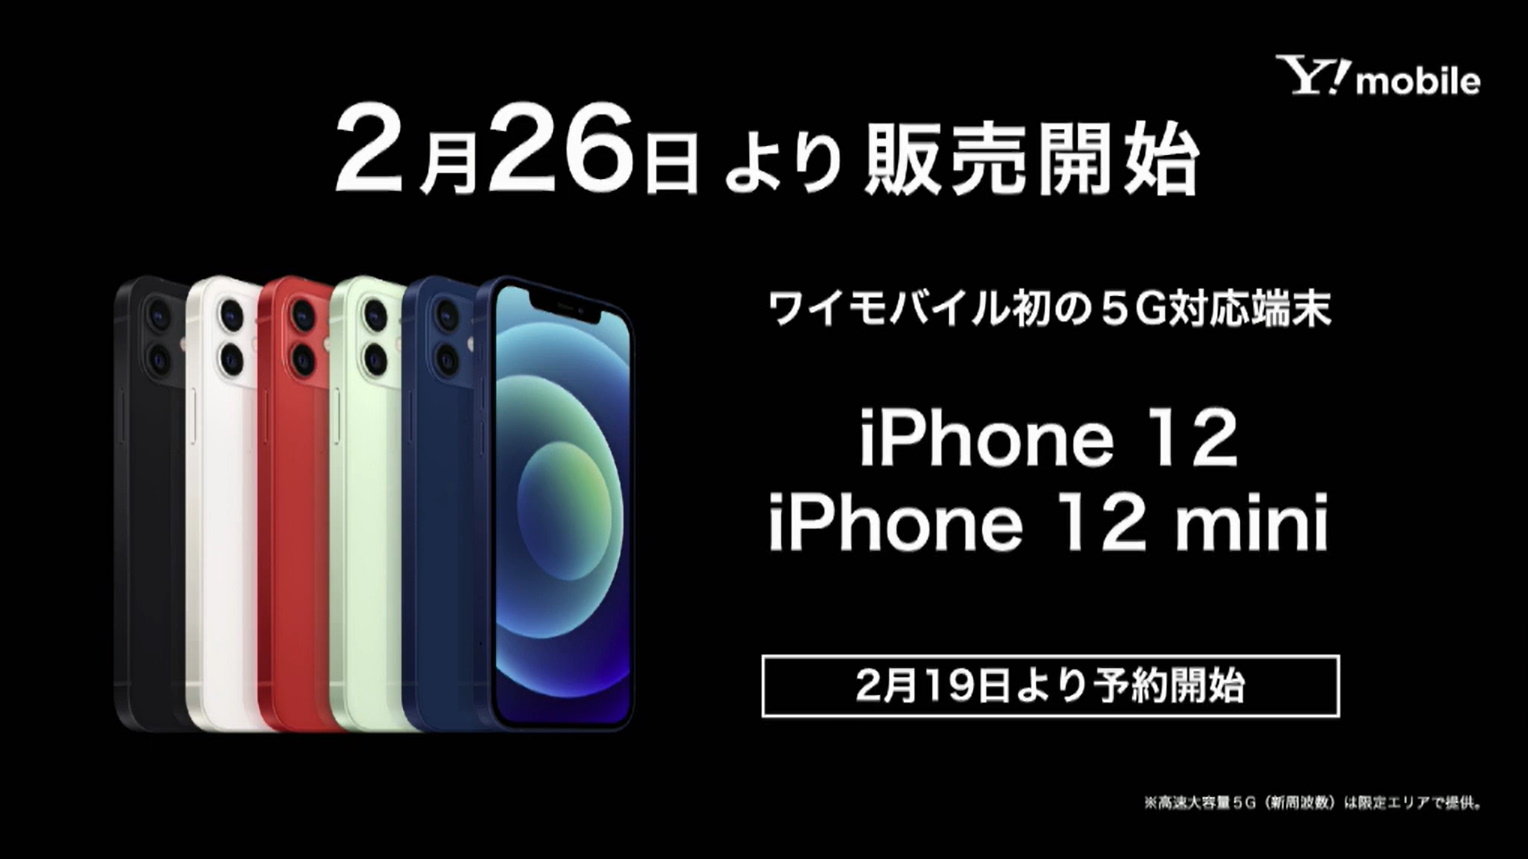 Y!mobileの「iPhone 12」「iPhone 12 mini」は2月26日発売 2月19日から予約受け付け開始 - ITmedia